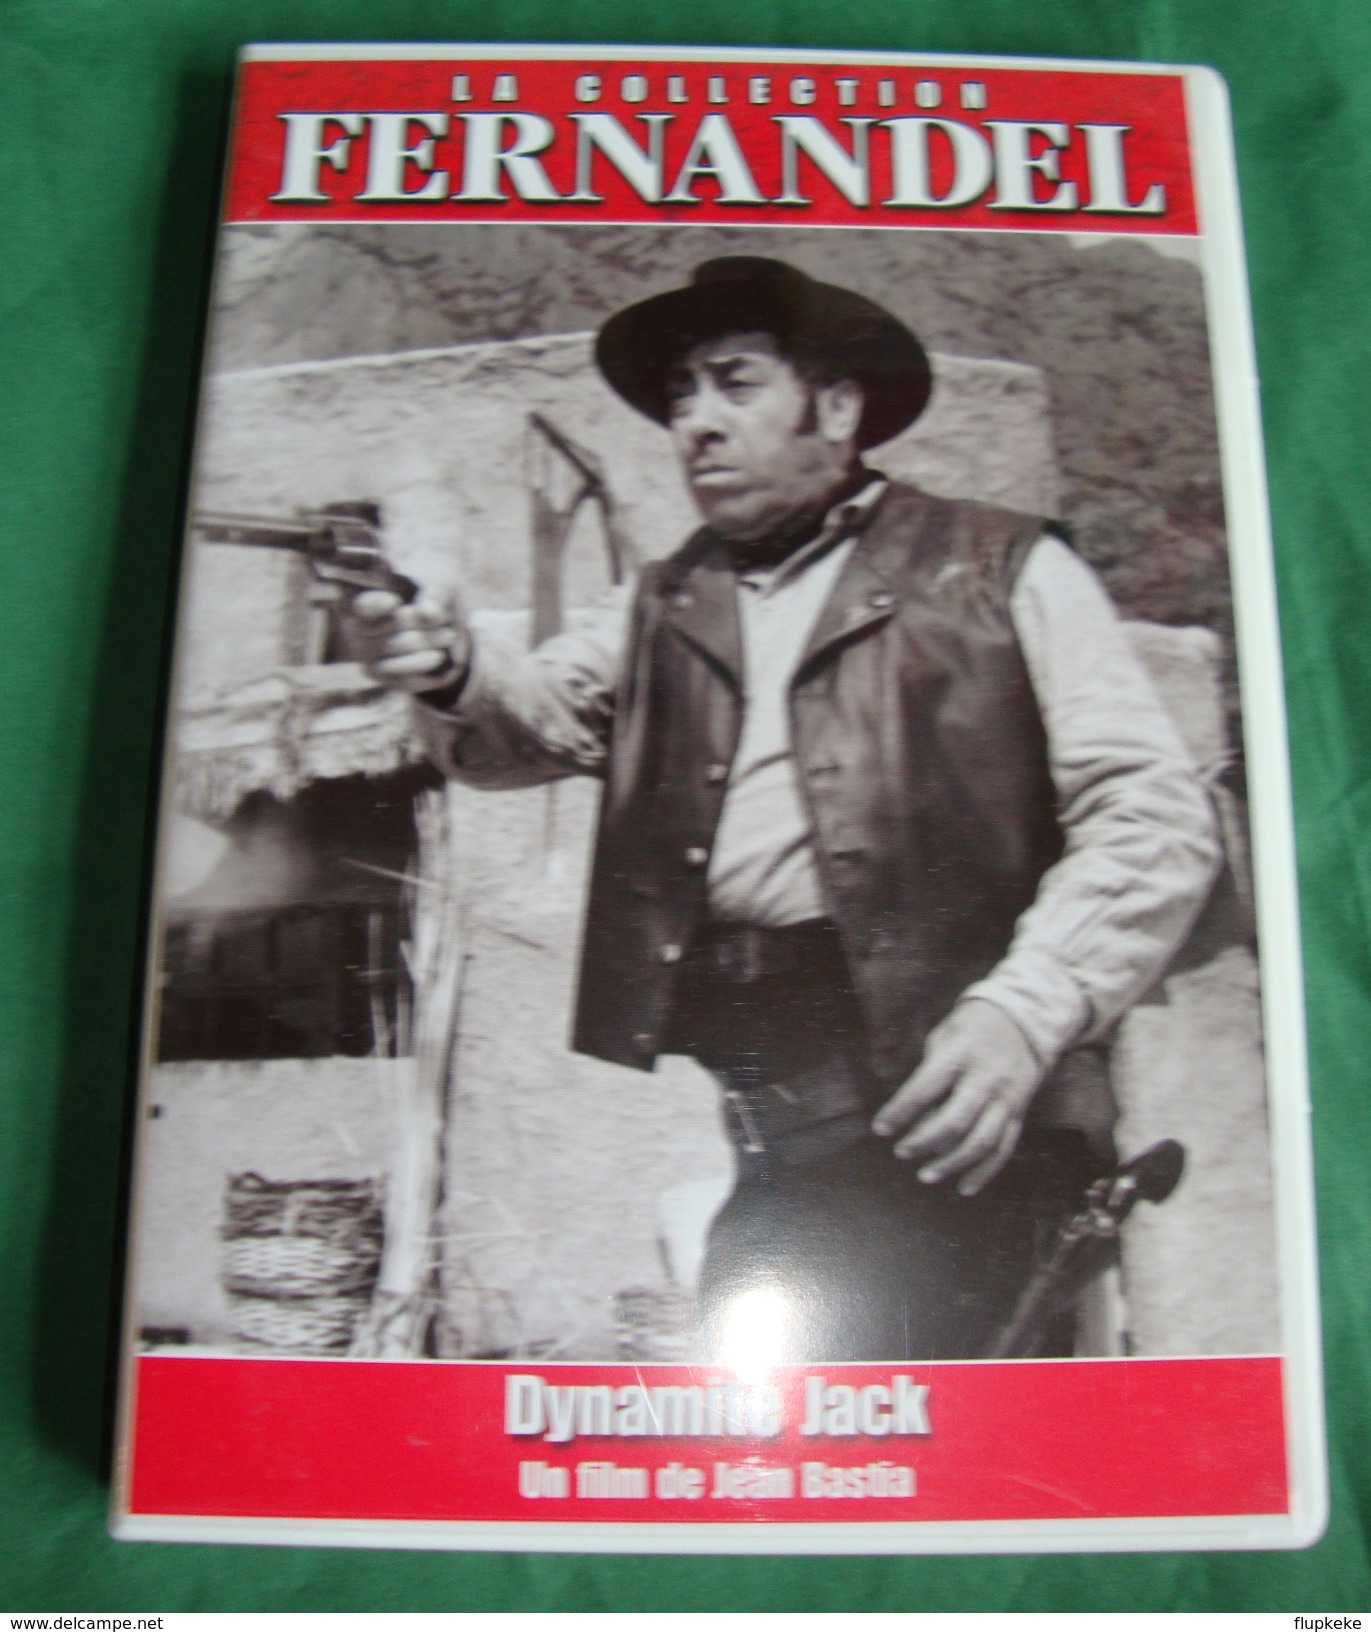 Dvd Zone 2 Dynamite Jack 1961 Collection Fernandel Vf - Comedy